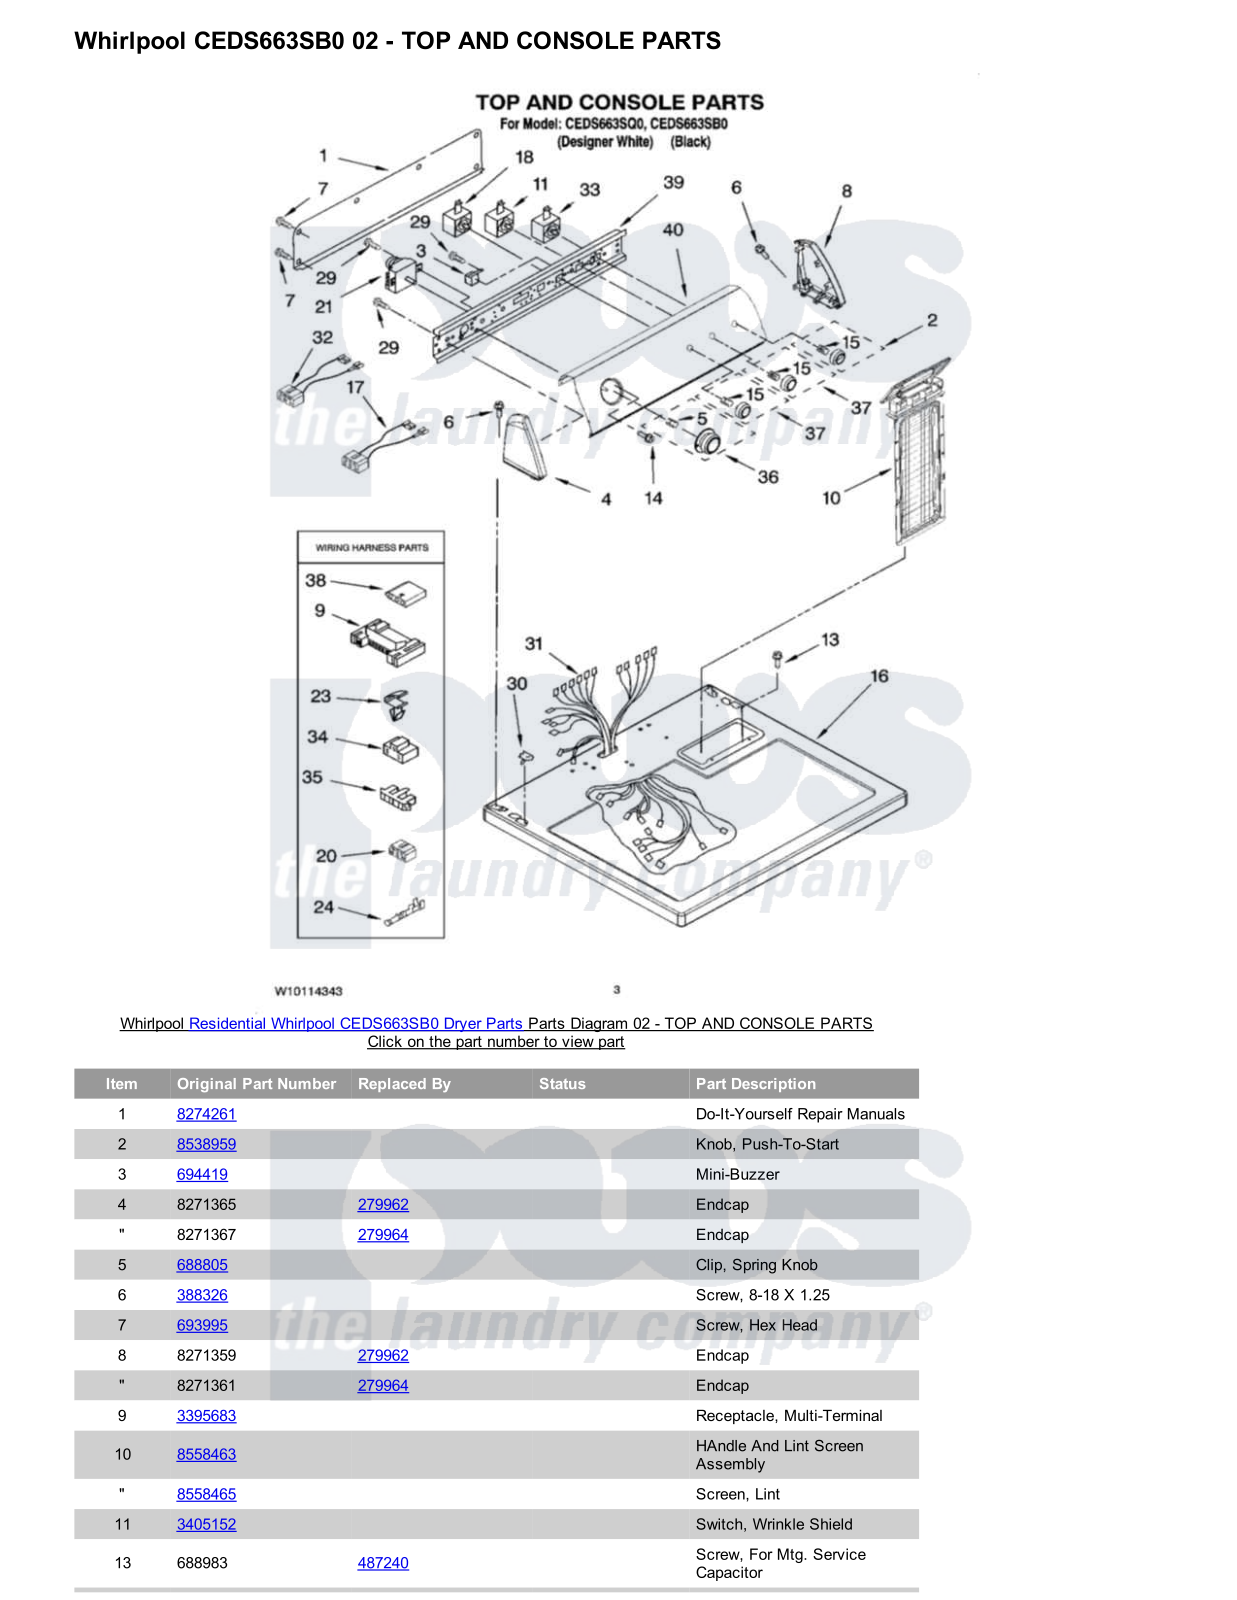 Whirlpool CEDS663SB0 Parts Diagram